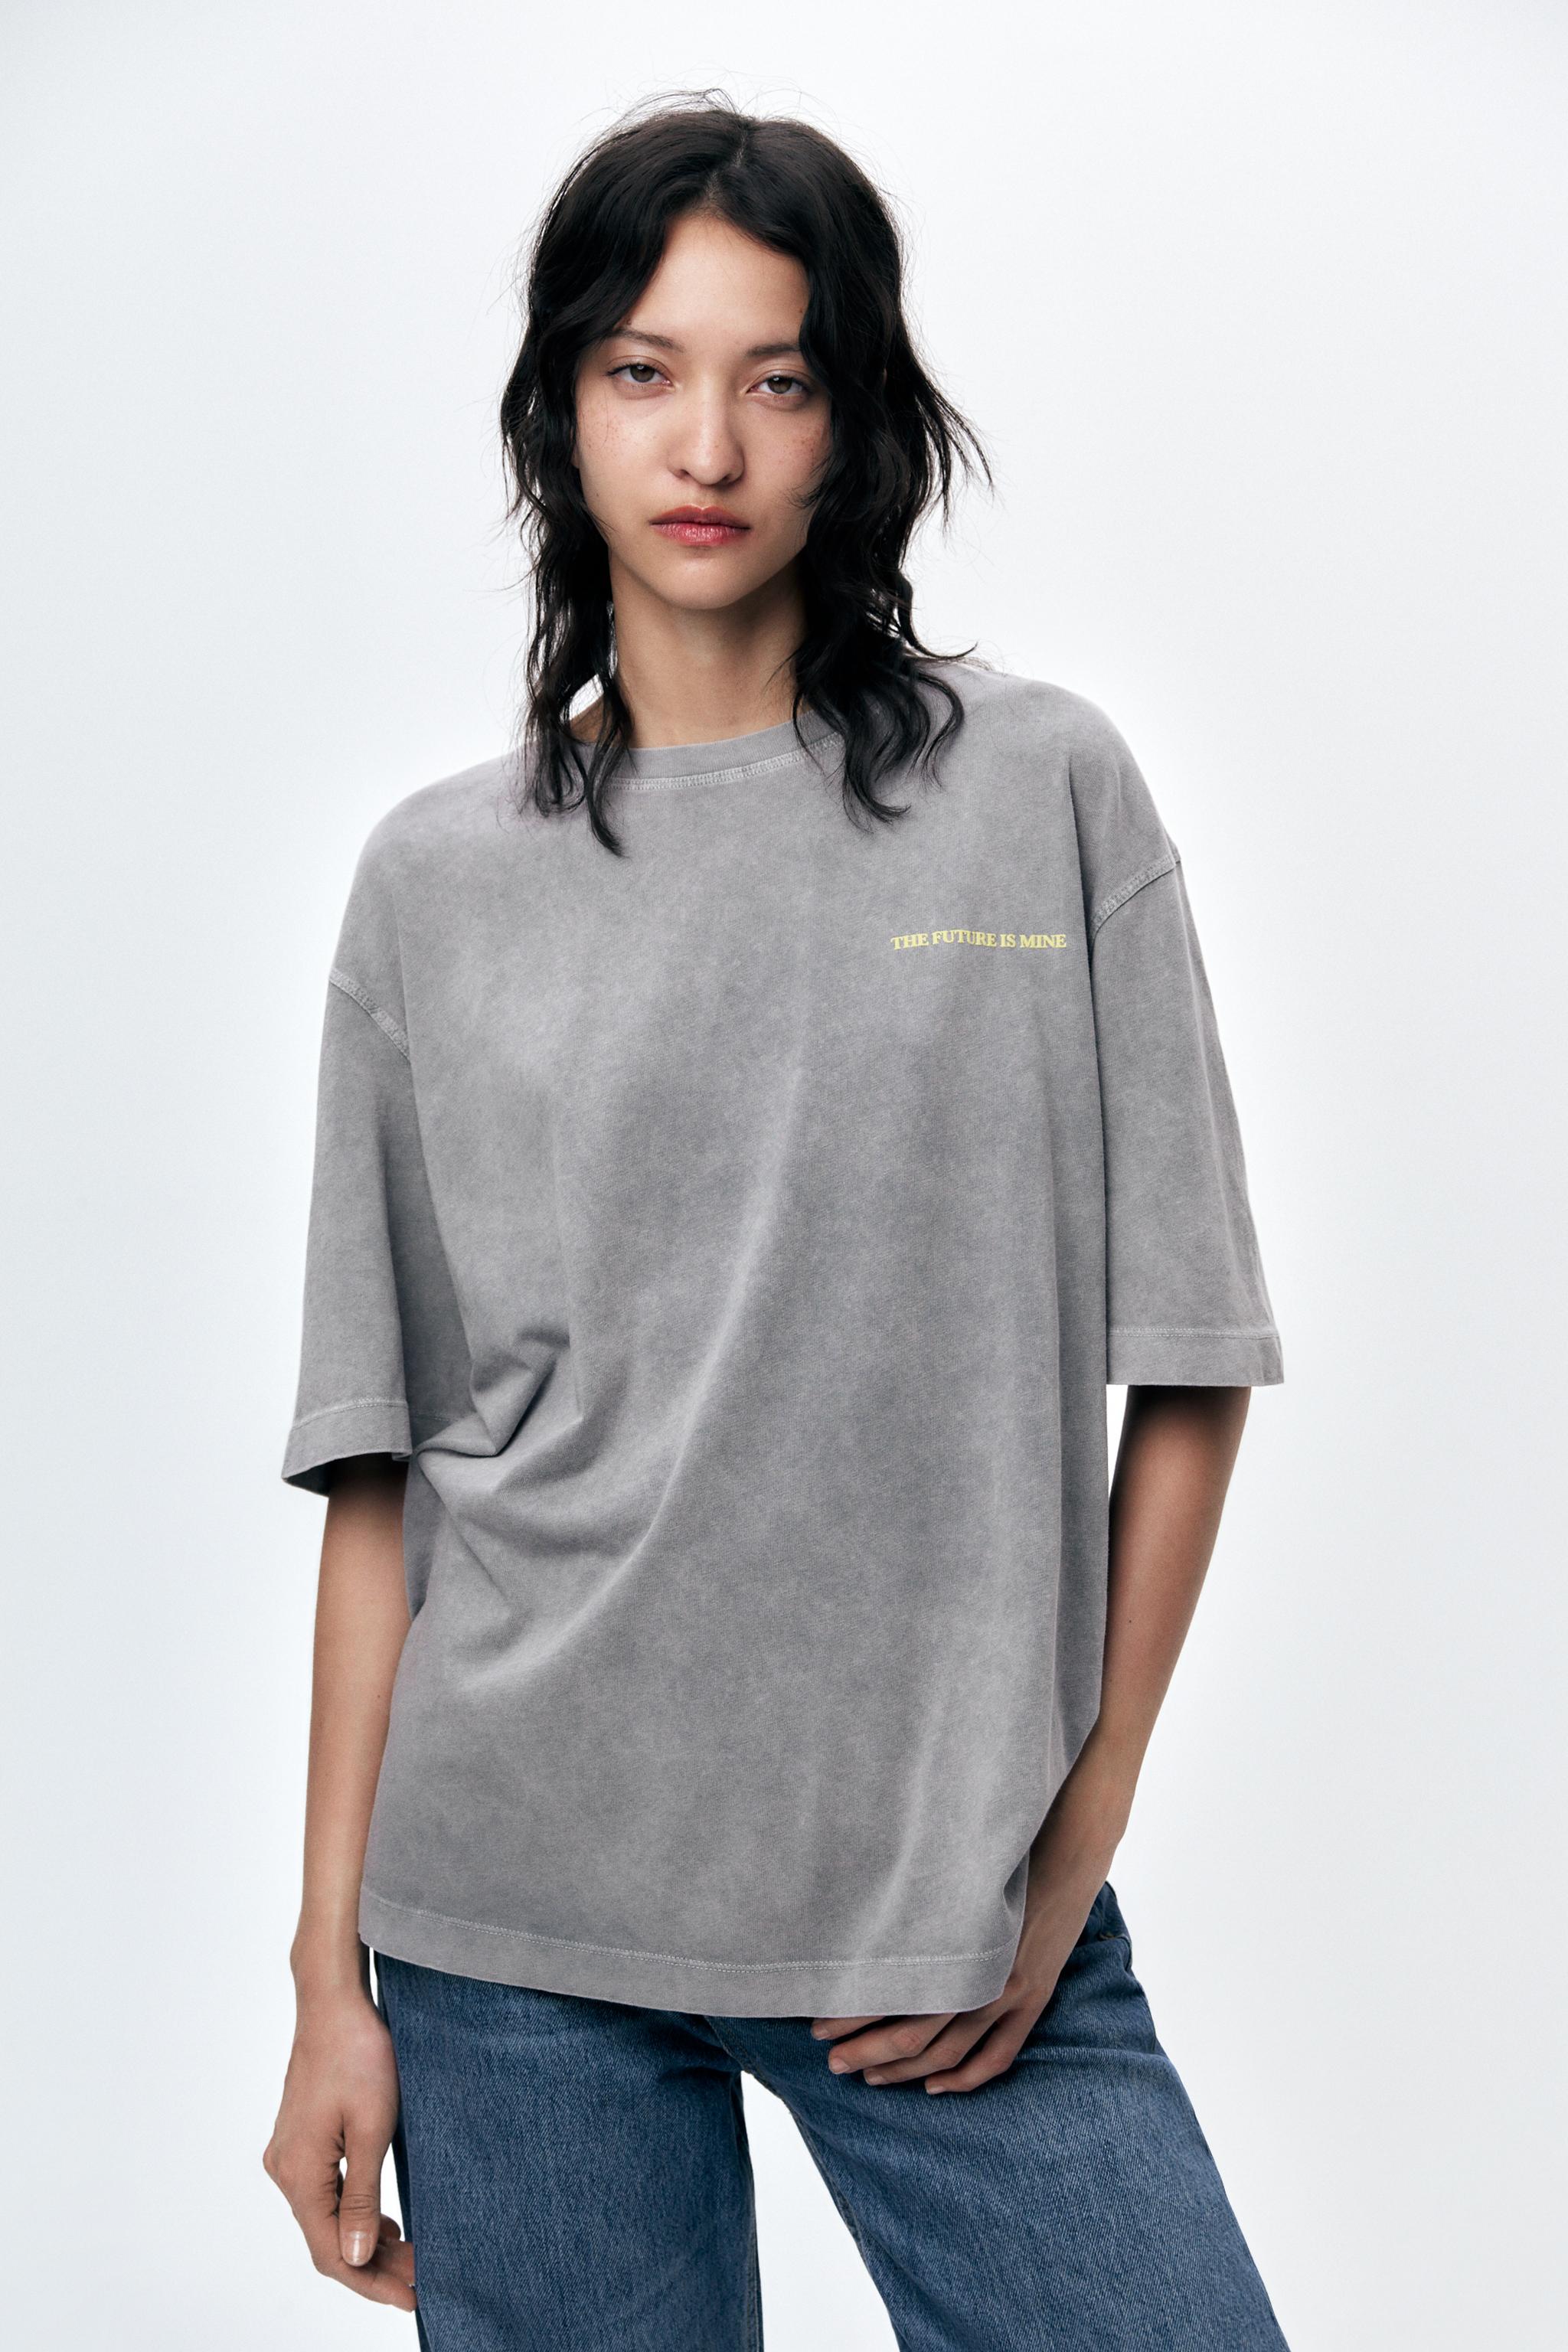 Top Short Sleeve By Zara Size: Xl